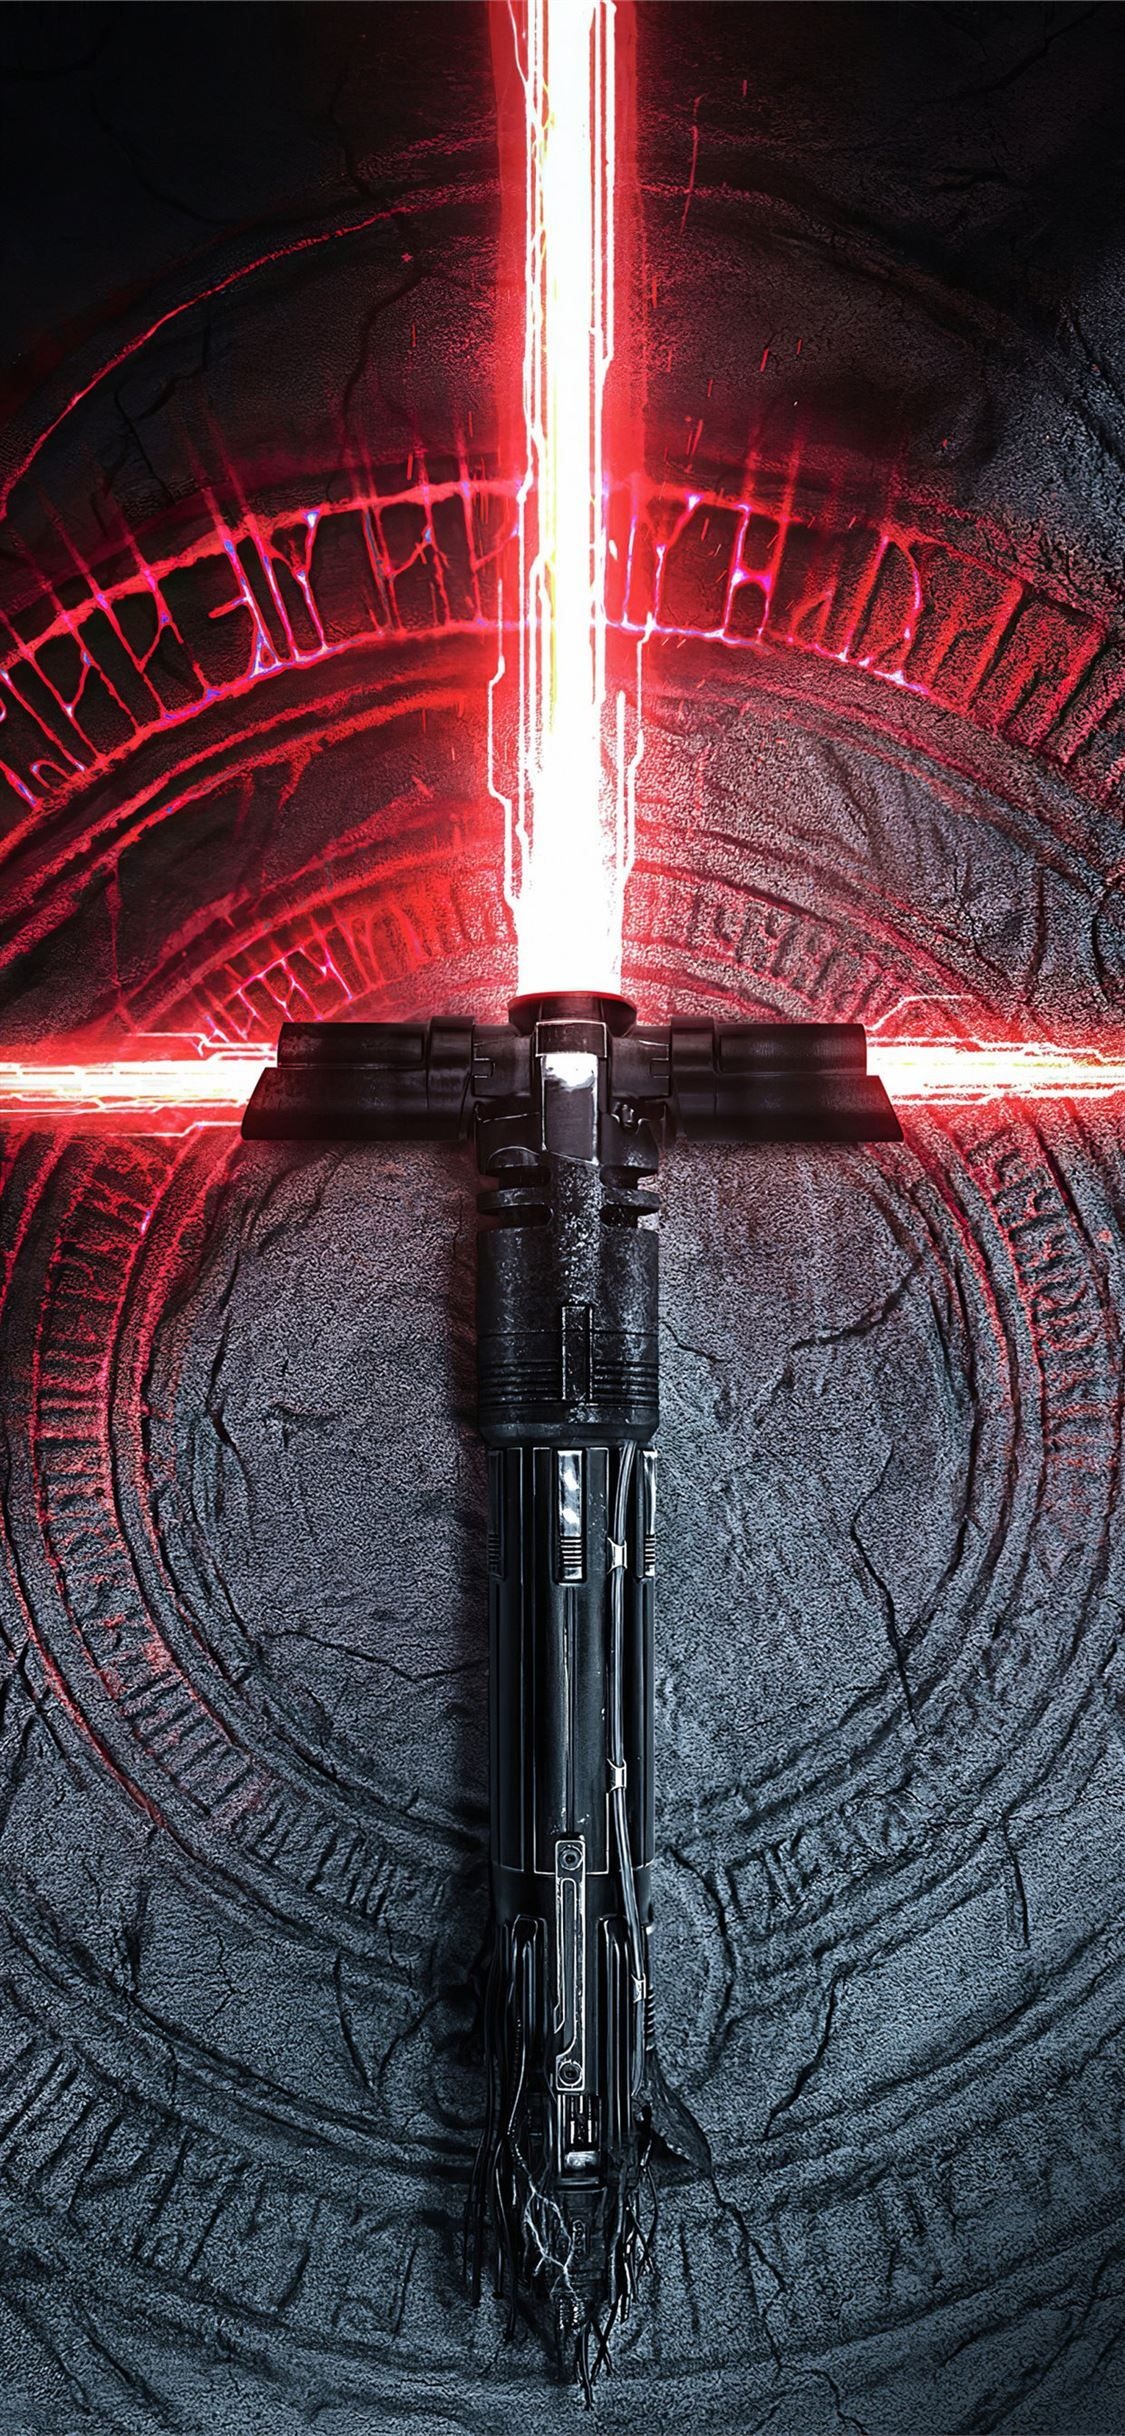 Kylo Ren's lightsaber in action, Star Wars movie scenes, Epic battle sequences, Cinematic 4K wallpaper, 1130x2440 HD Phone